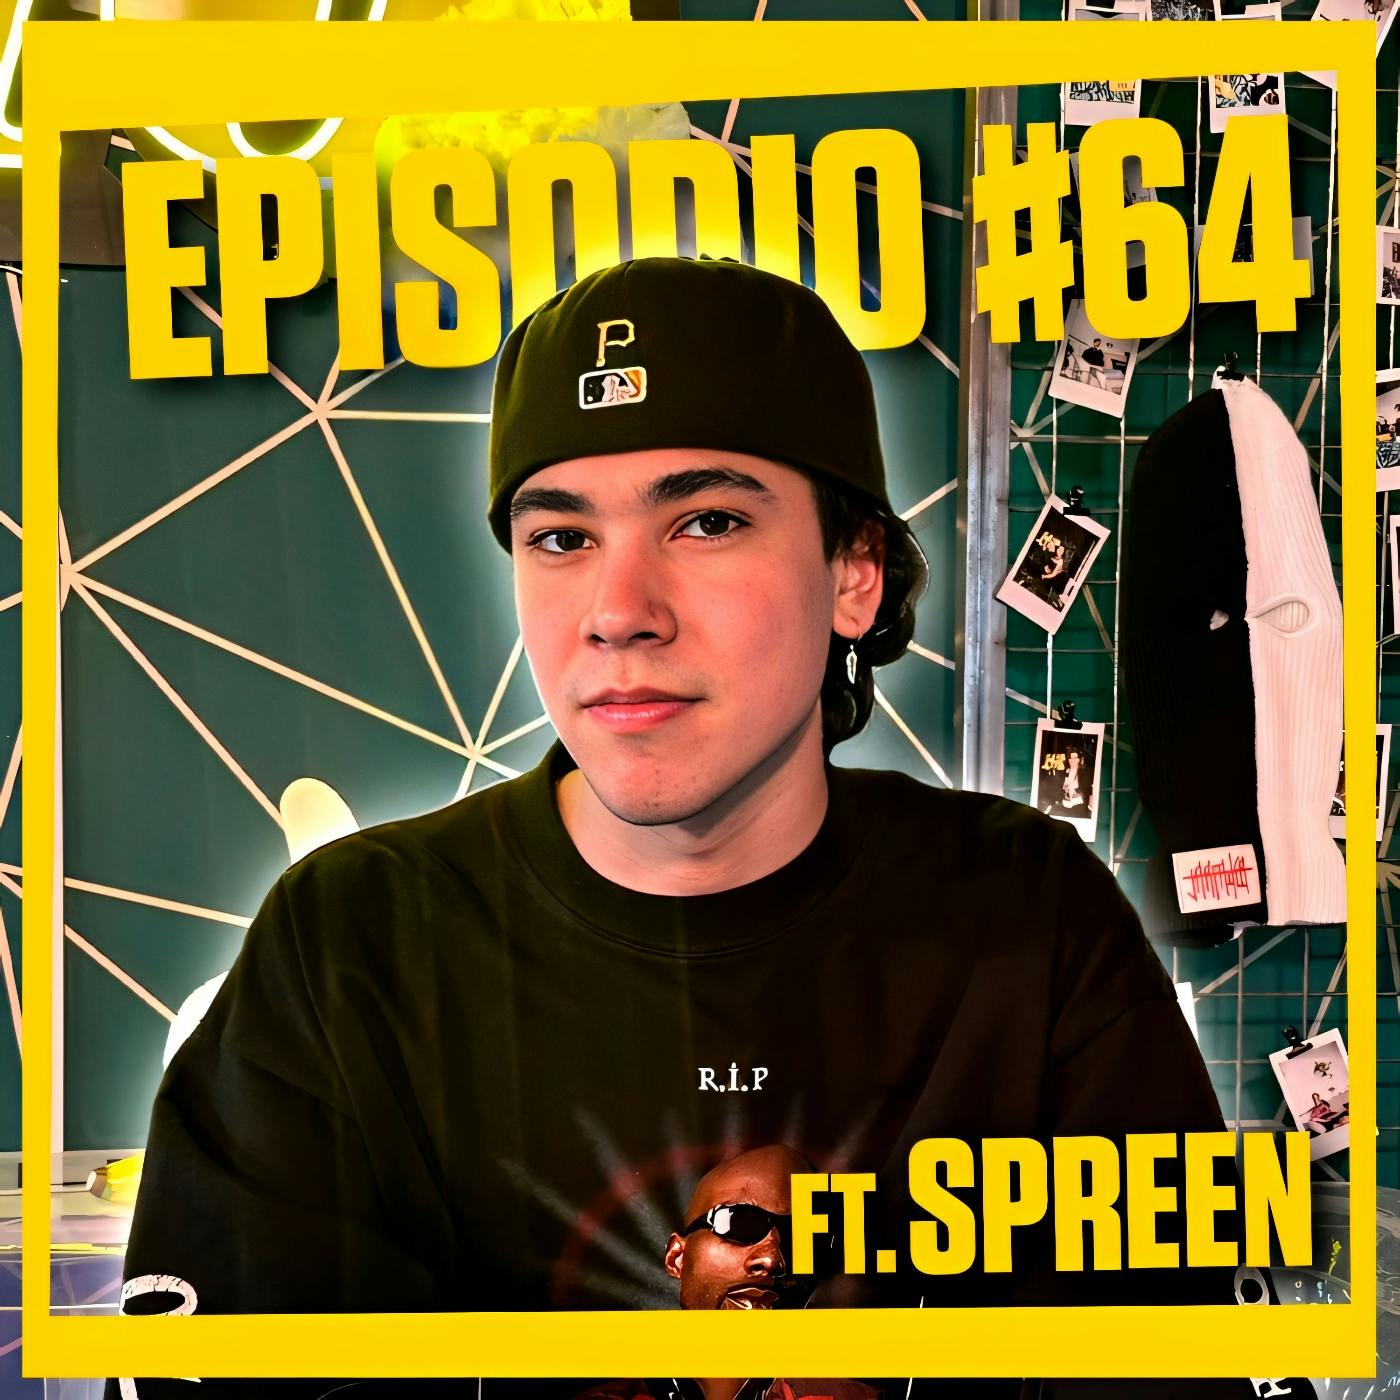 CLUB 113 | EPISODIO 64 feat. SPREEN